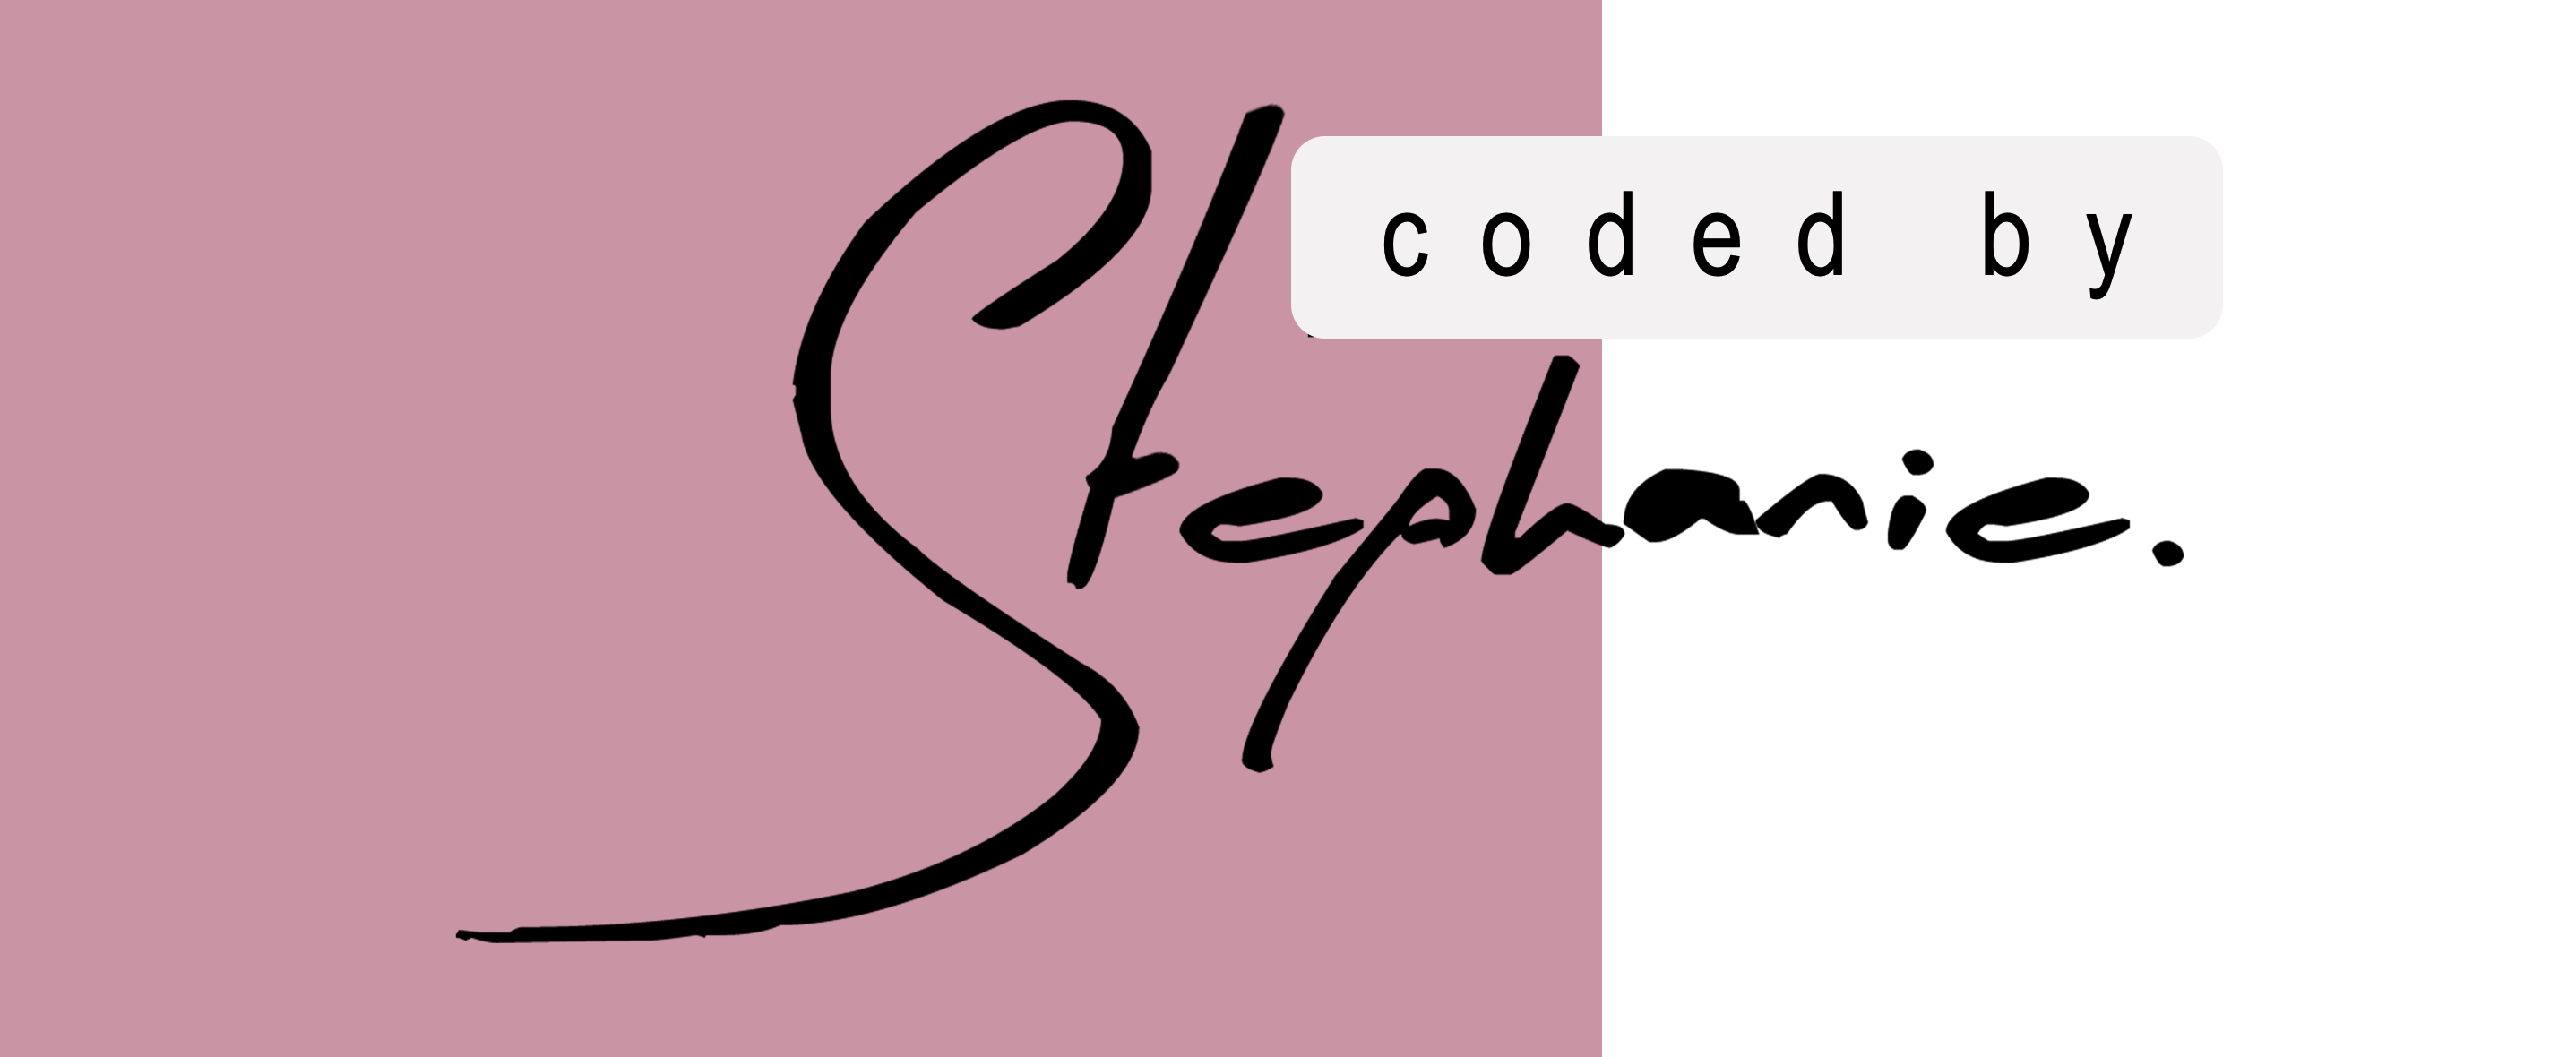 Coded by Stephanie Logo